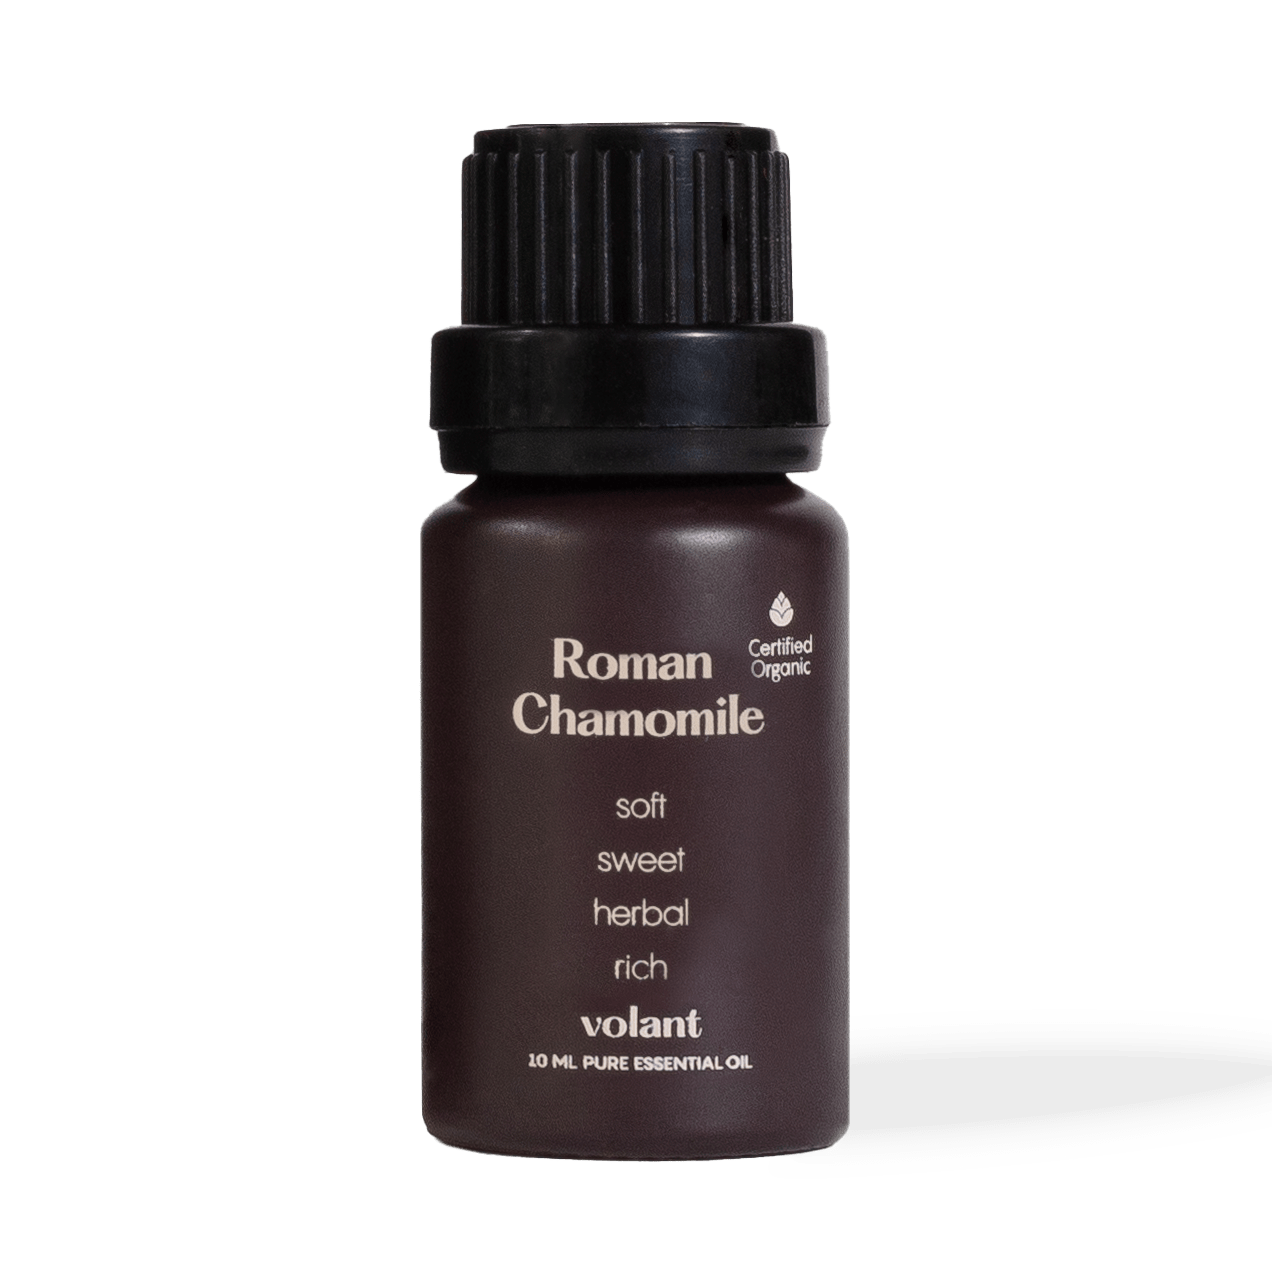 volant organic roman chamomile essential oil skin impurities like acne